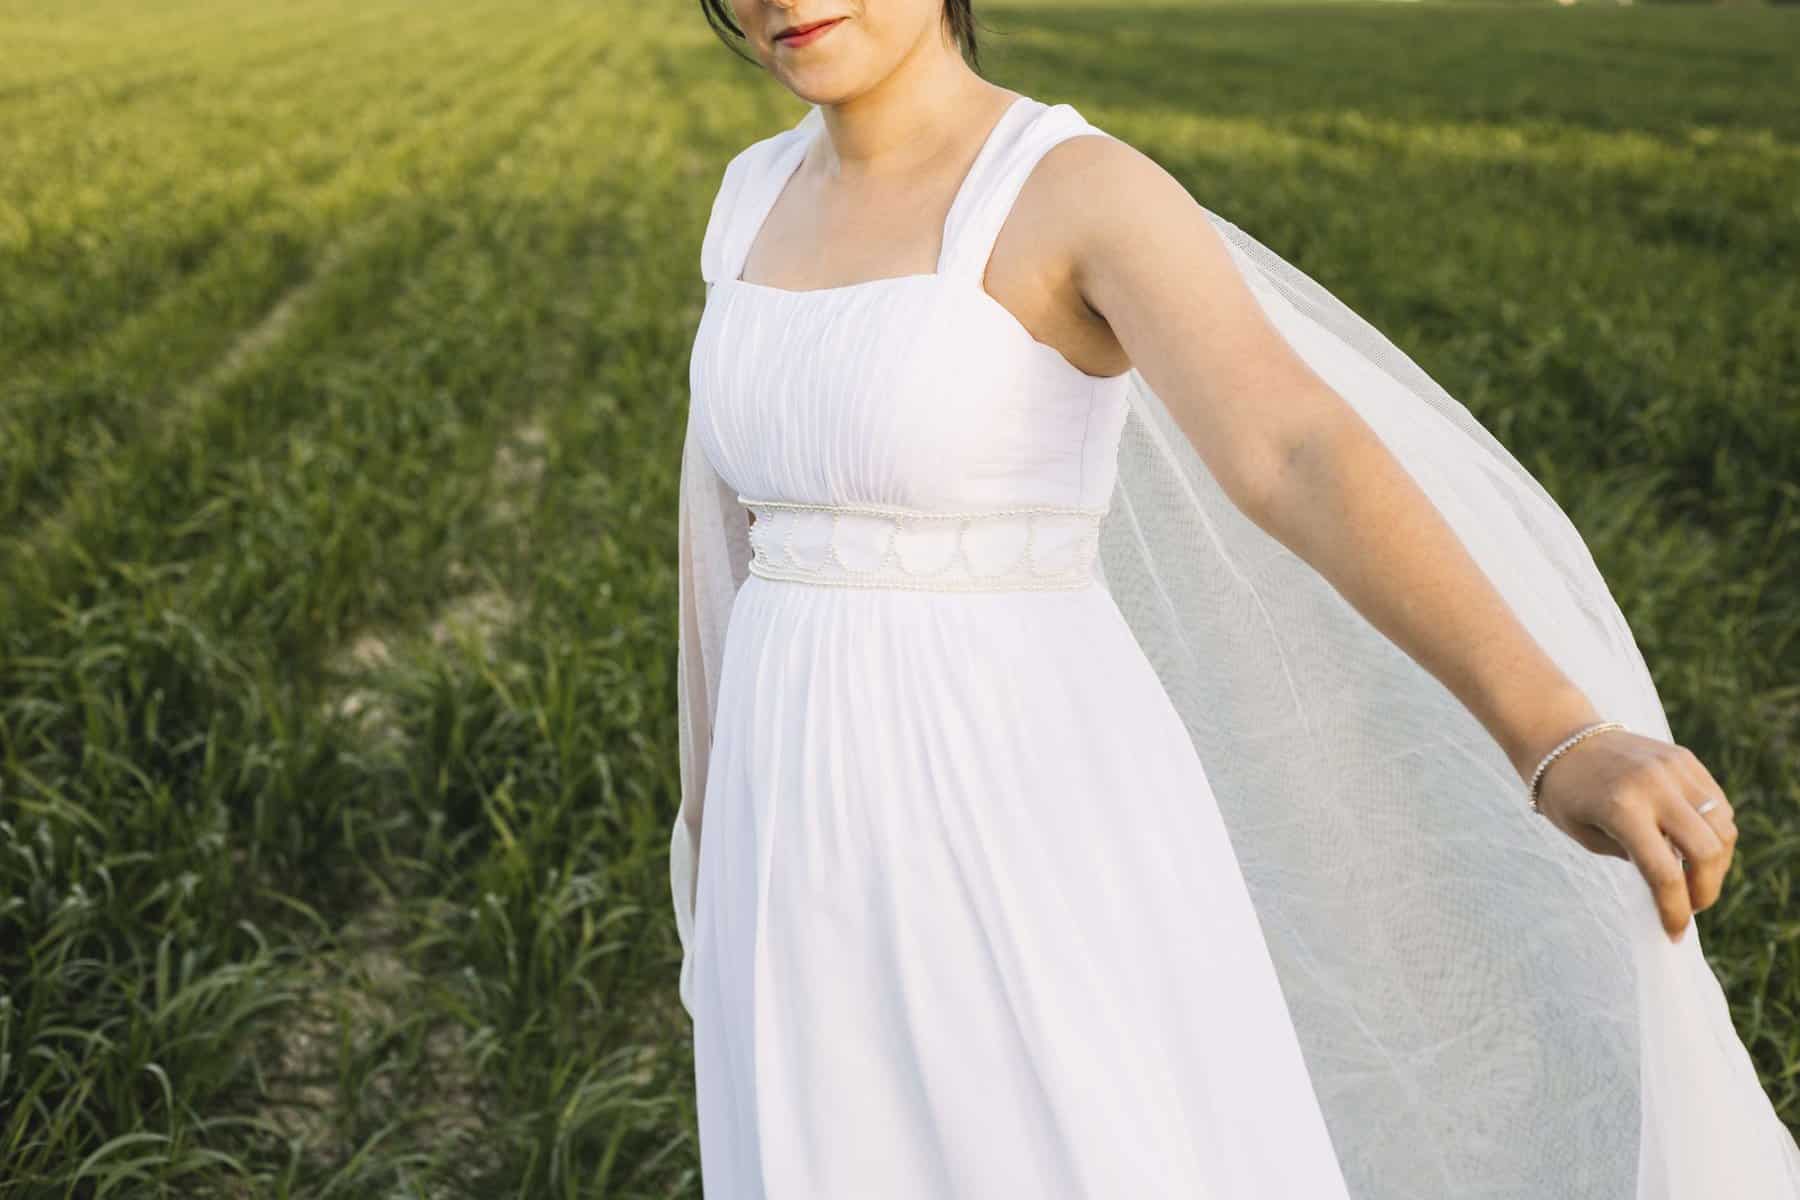 Transforming Simplicity How to Dress Up a Plain White Dress